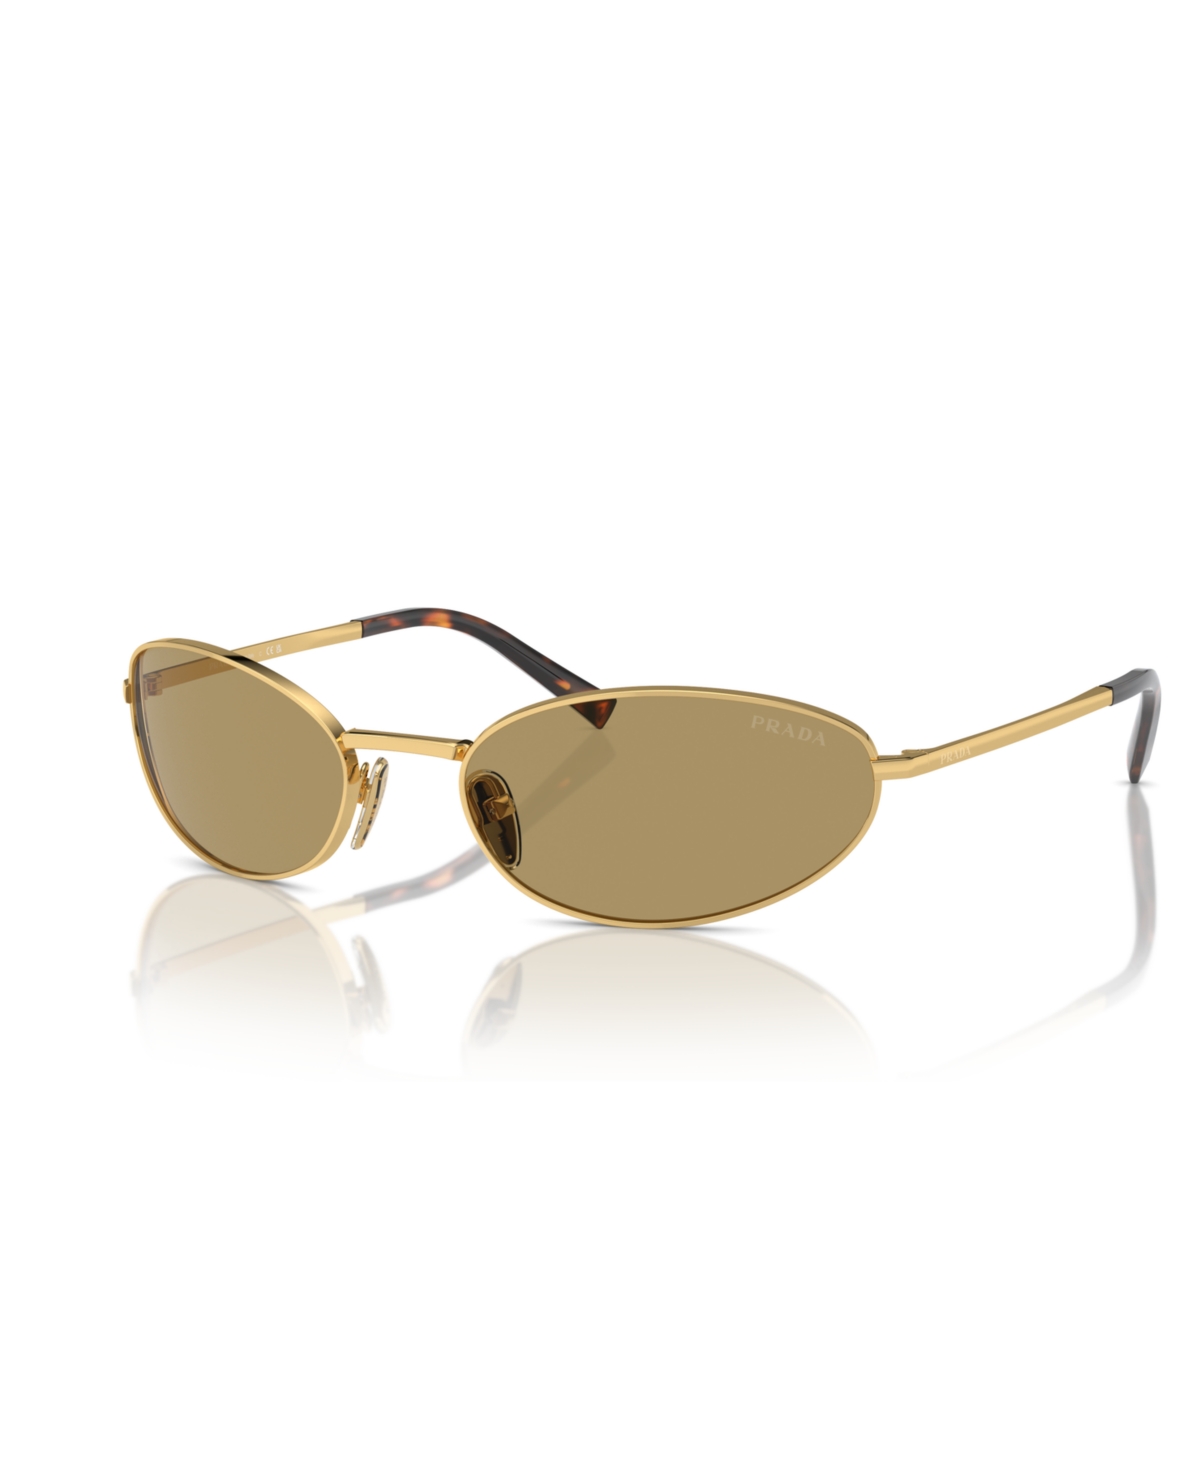 Women's Sunglasses, Pr A59S - Gold